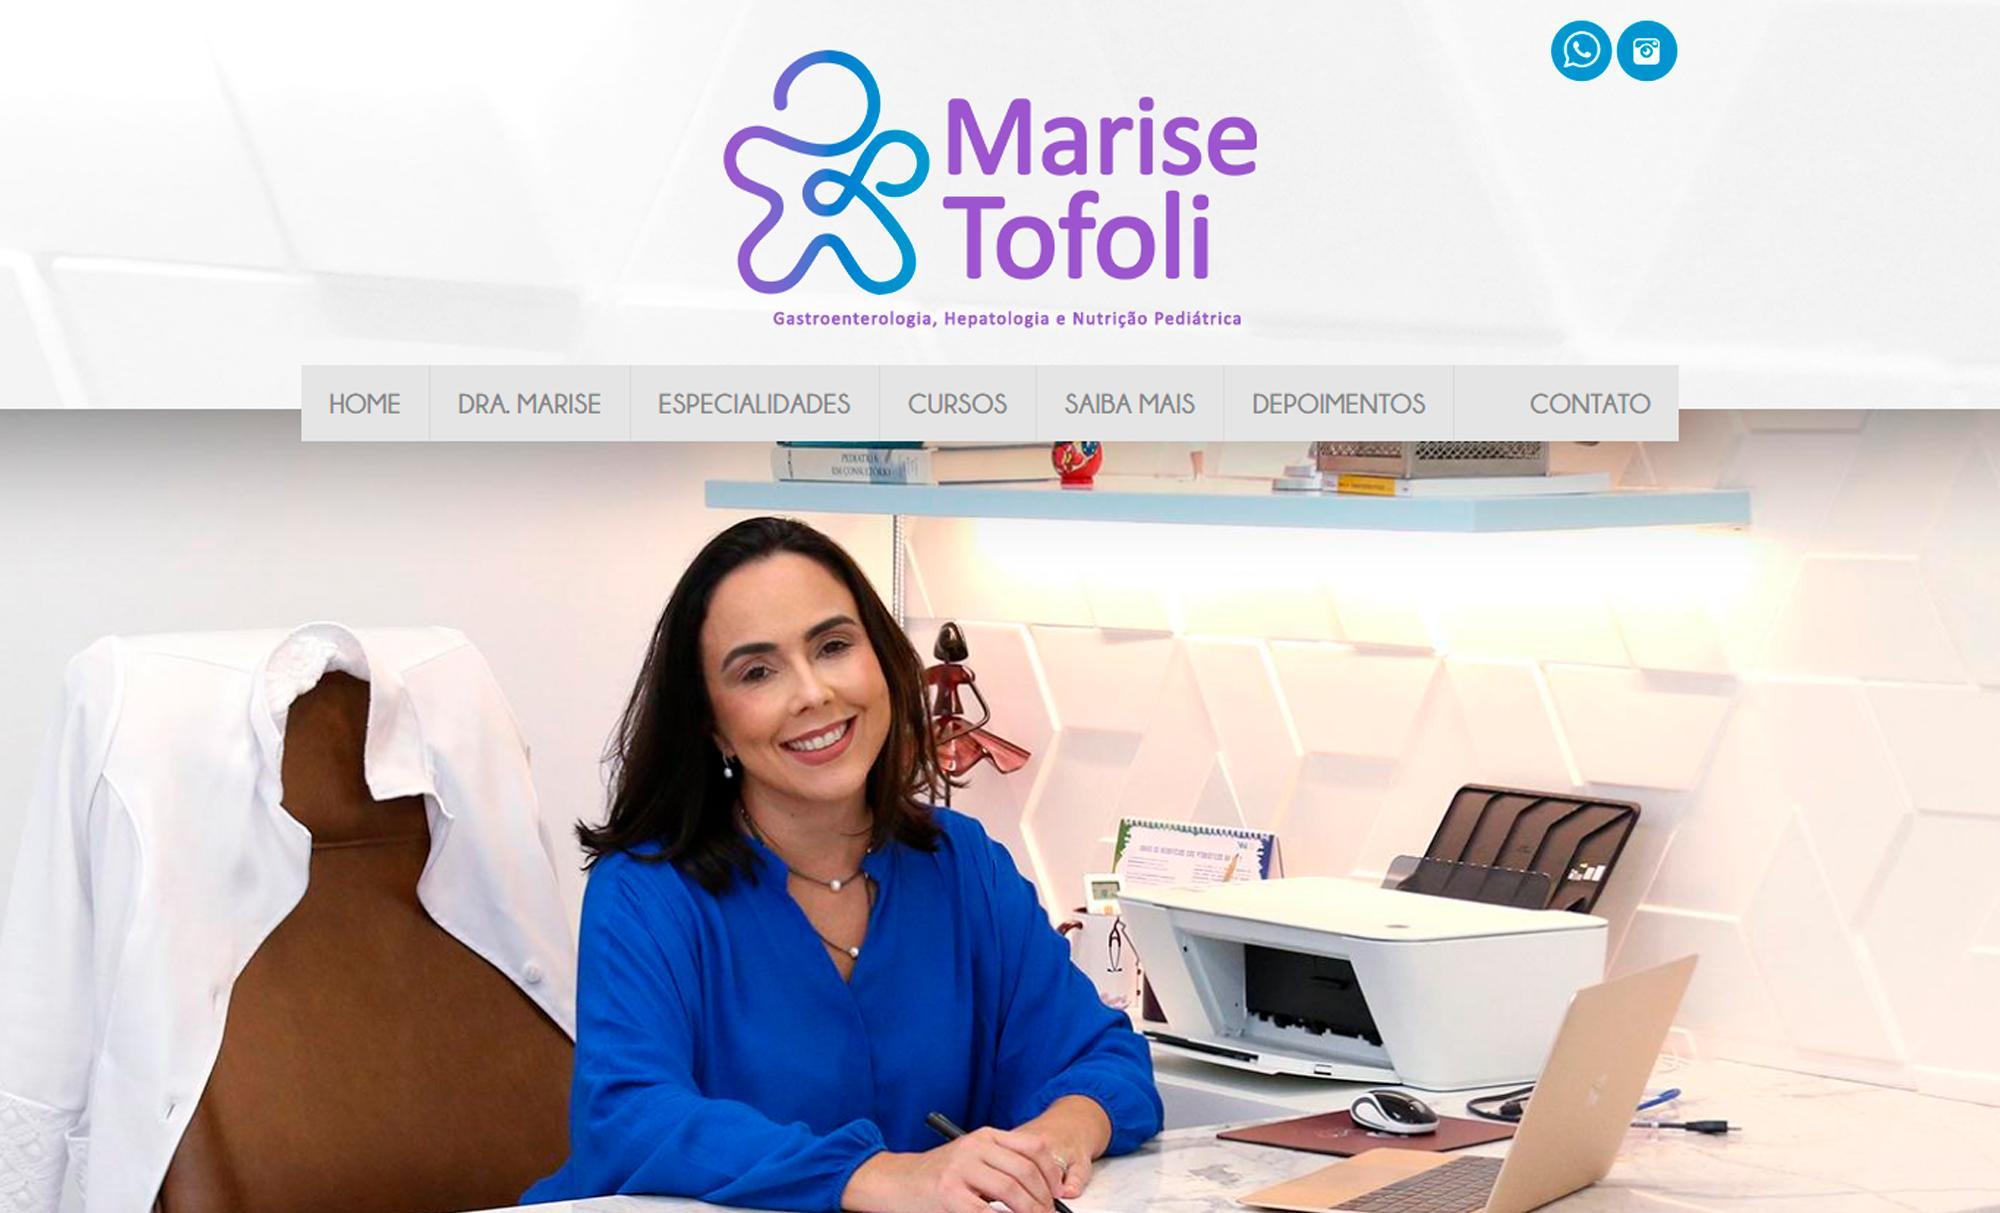 Desenvolvimento de Site Dra. Marise Tofoli - AsWeb